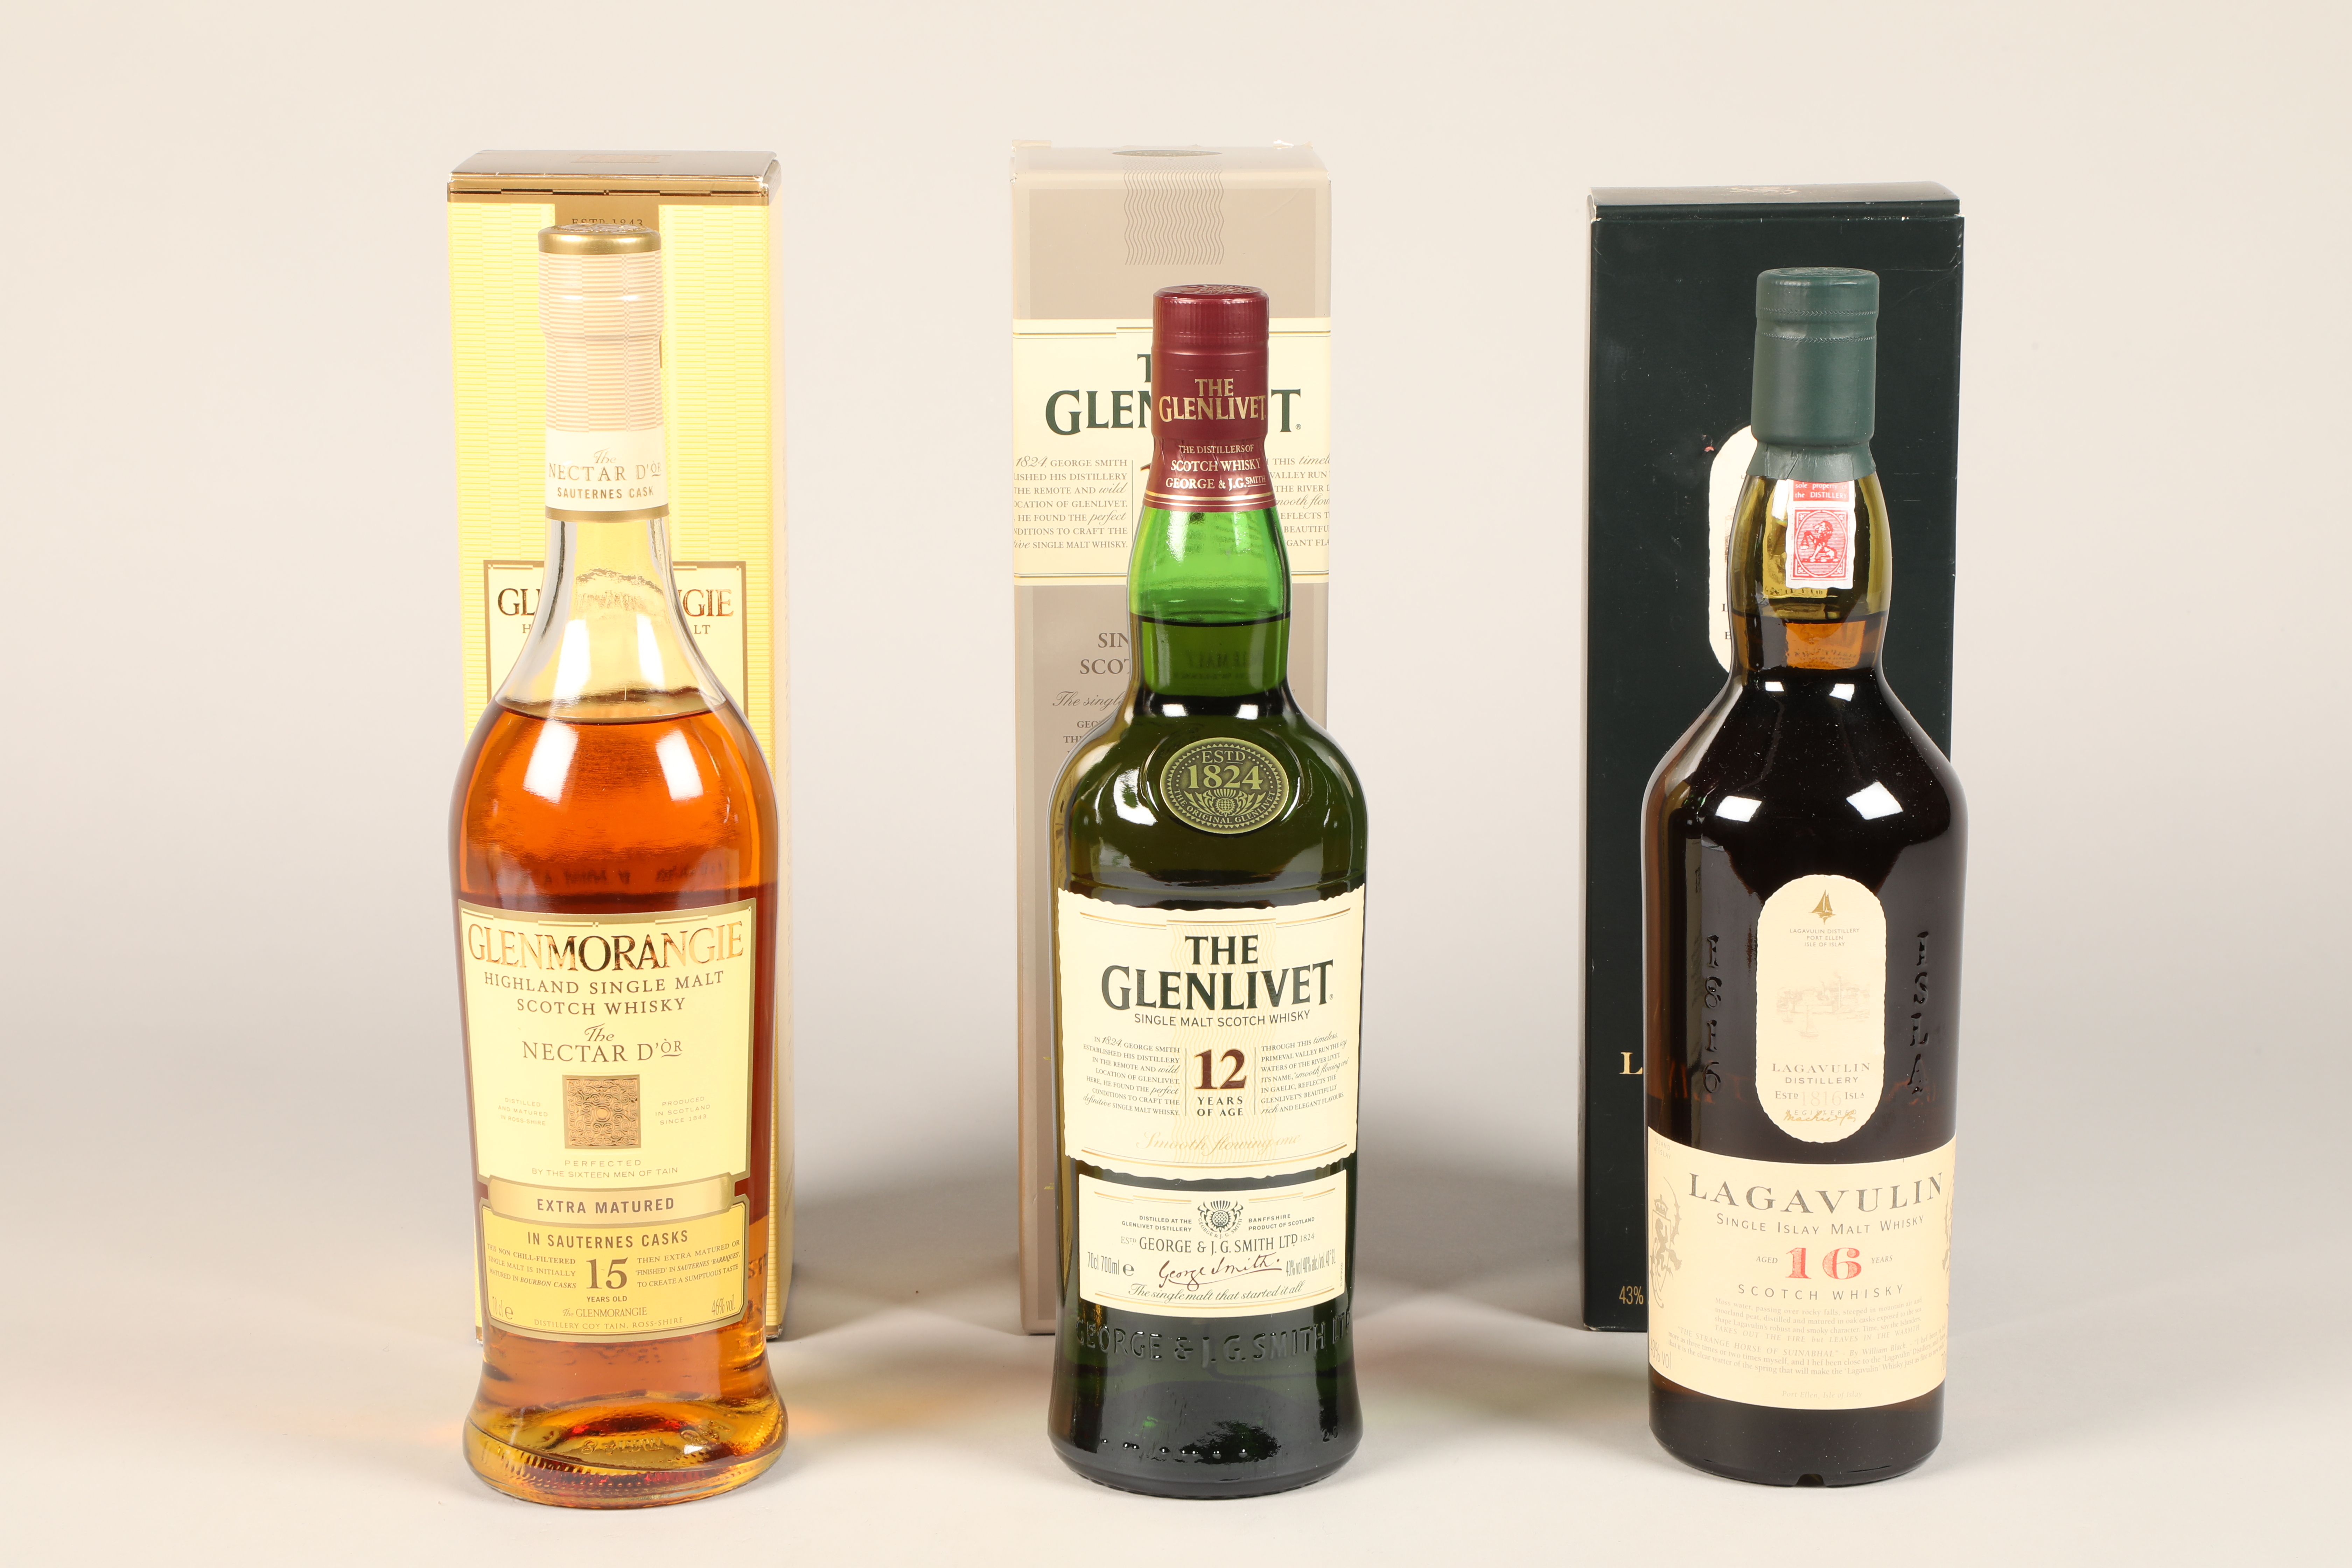 Glenmorangie Highland single malt Scotch whisky, 15 year old, 70cl, 46% vol with cardboard box